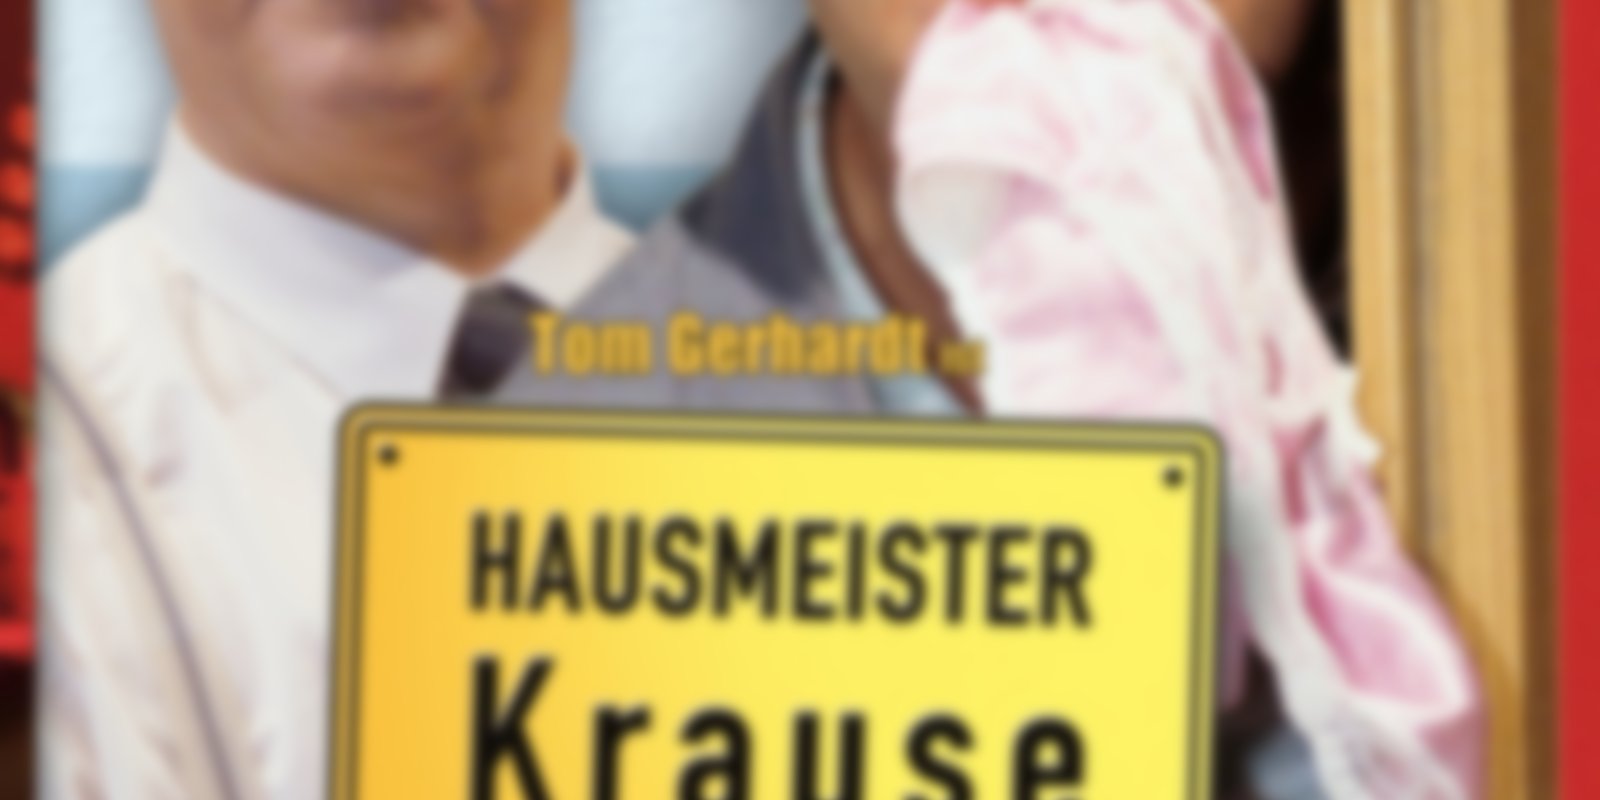 Hausmeister Krause - Staffel 7